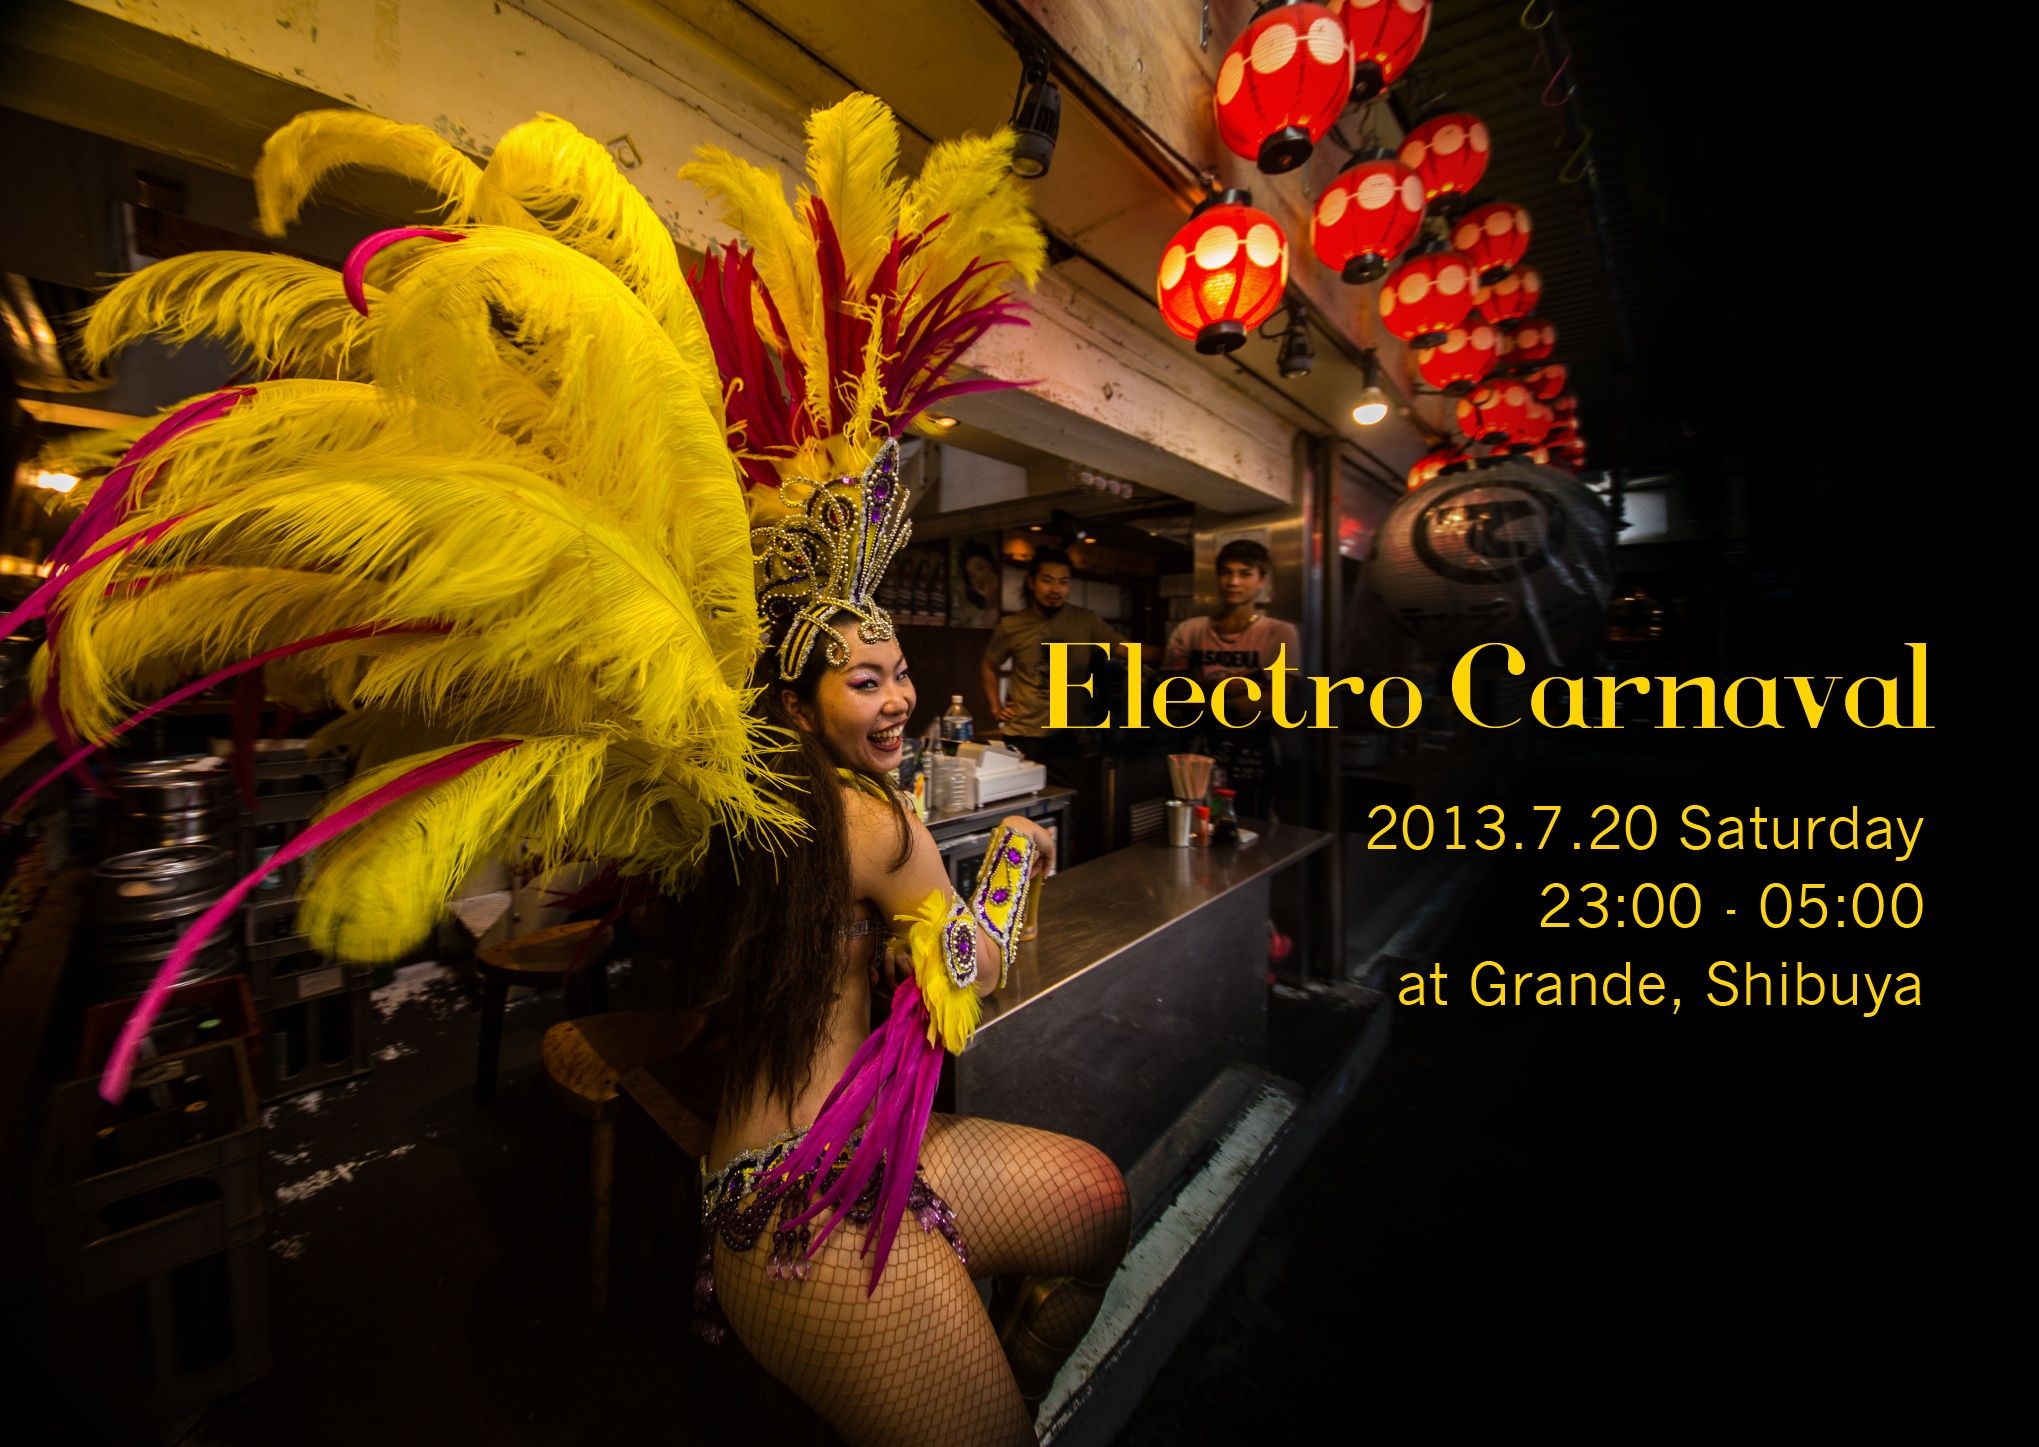 Electro Carnaval Main Image